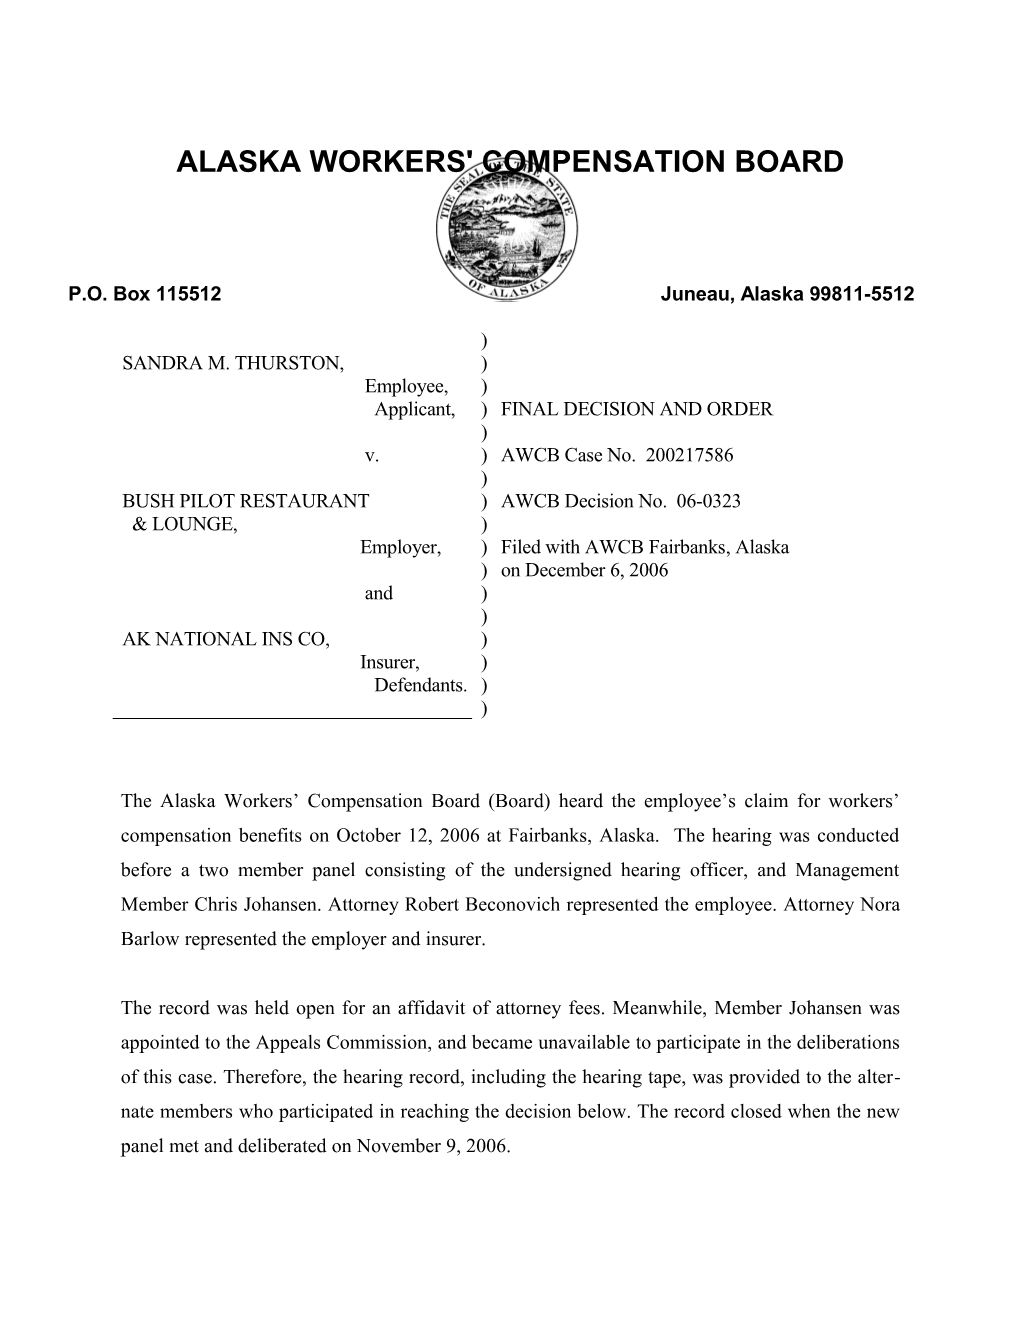 Alaska Workers' Compensation Board s29